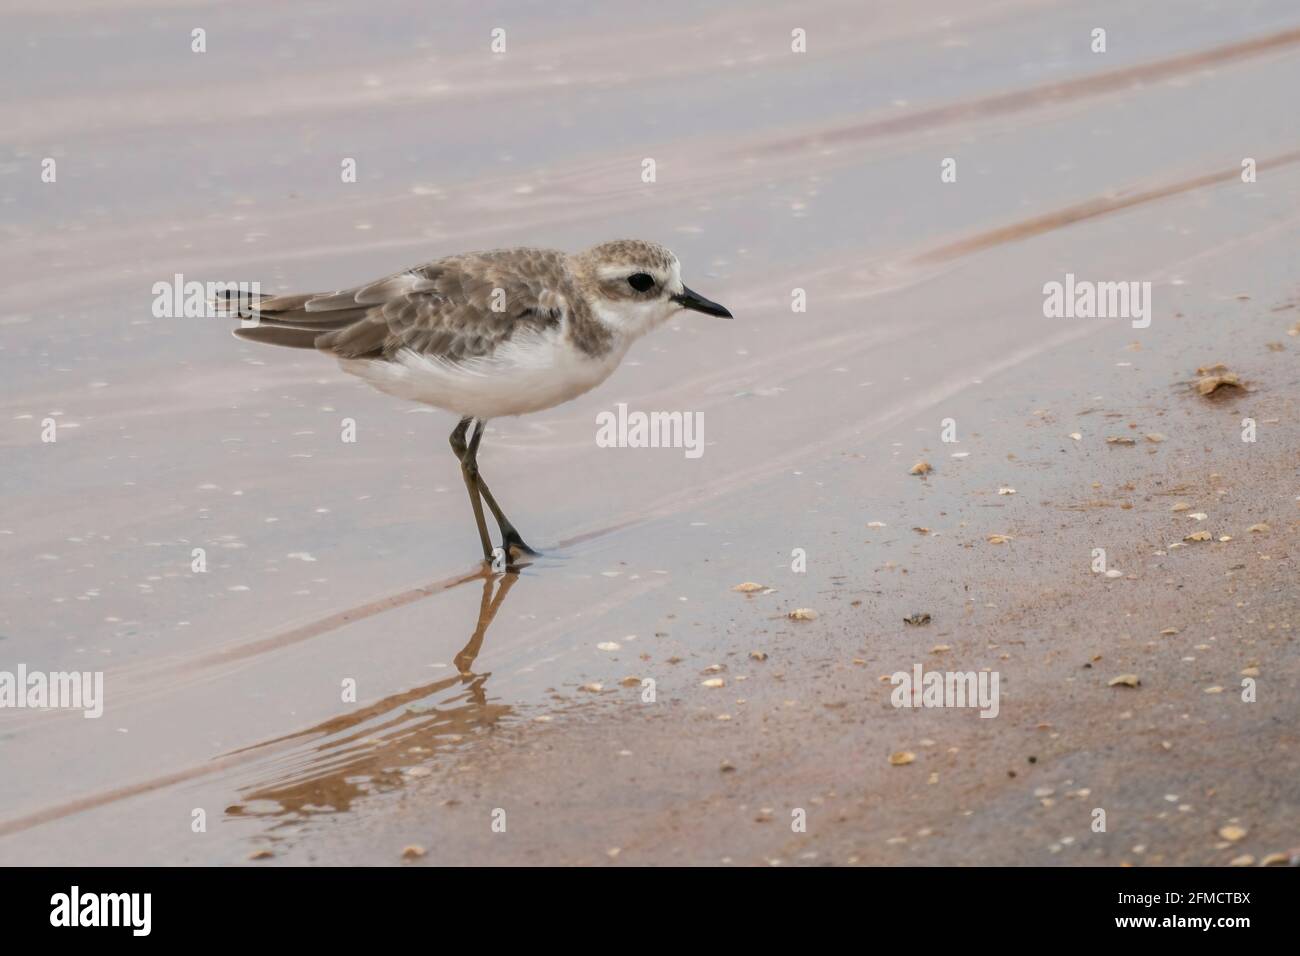 lesser sandplover or lesser sand plover, Charadrius mongolus, single bird standing on mud near water, Bundala, Sri Lanka, 27 August 2019 Stock Photo